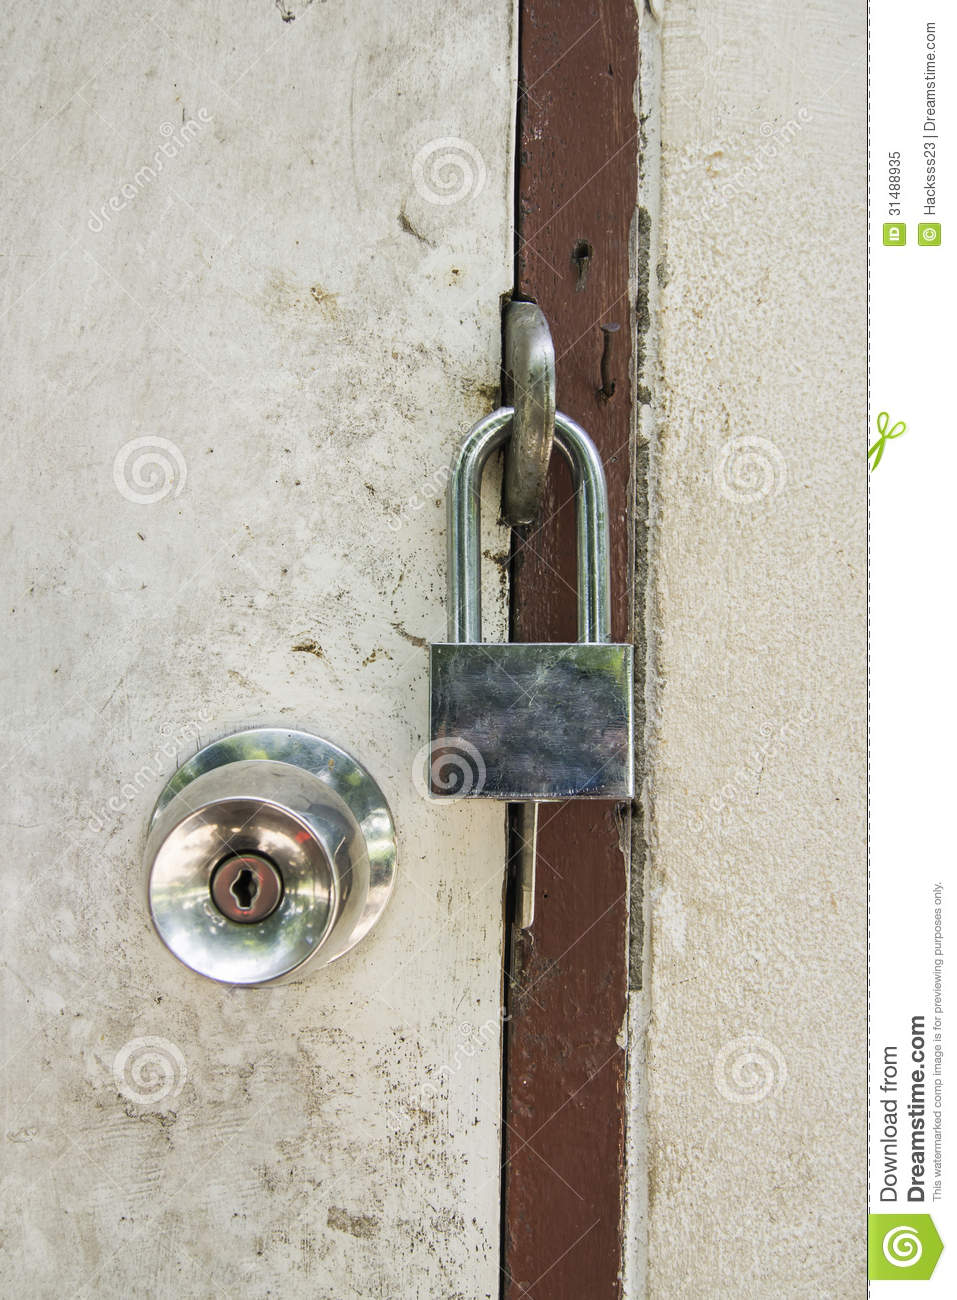 door knob with key lock photo - 12